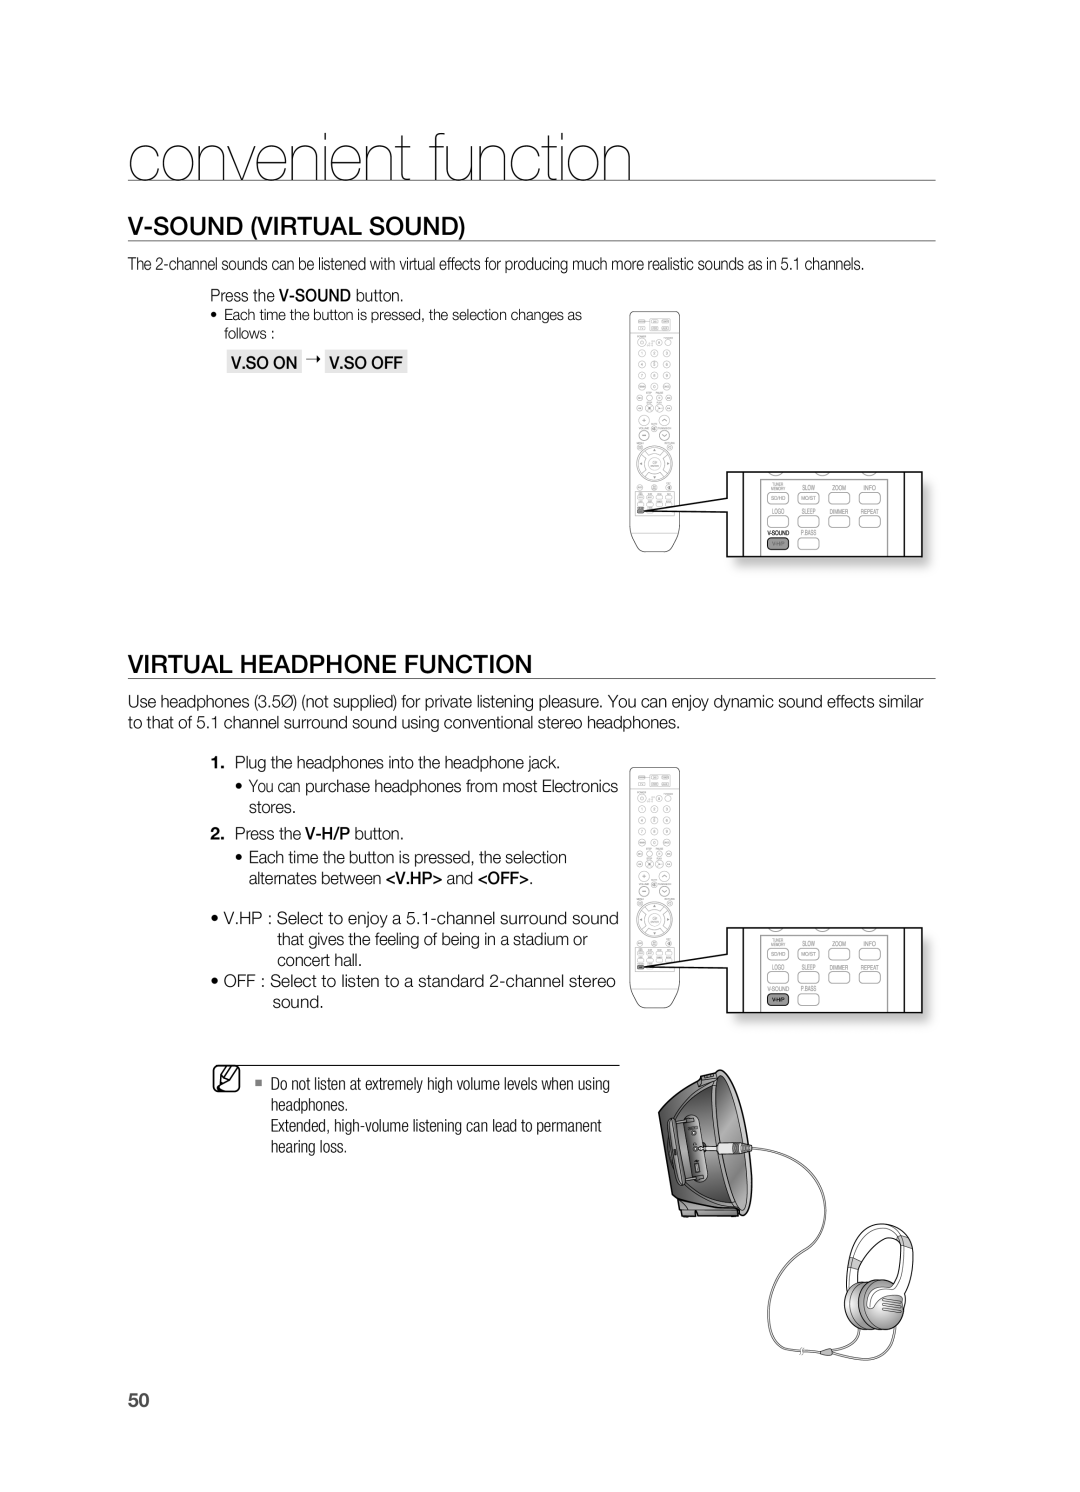 Samsung HT-A100 user manual V-SOUNDVIrTUAl SOUND, VIrTUAl HEADPHONE FUNCTION, convenient function 